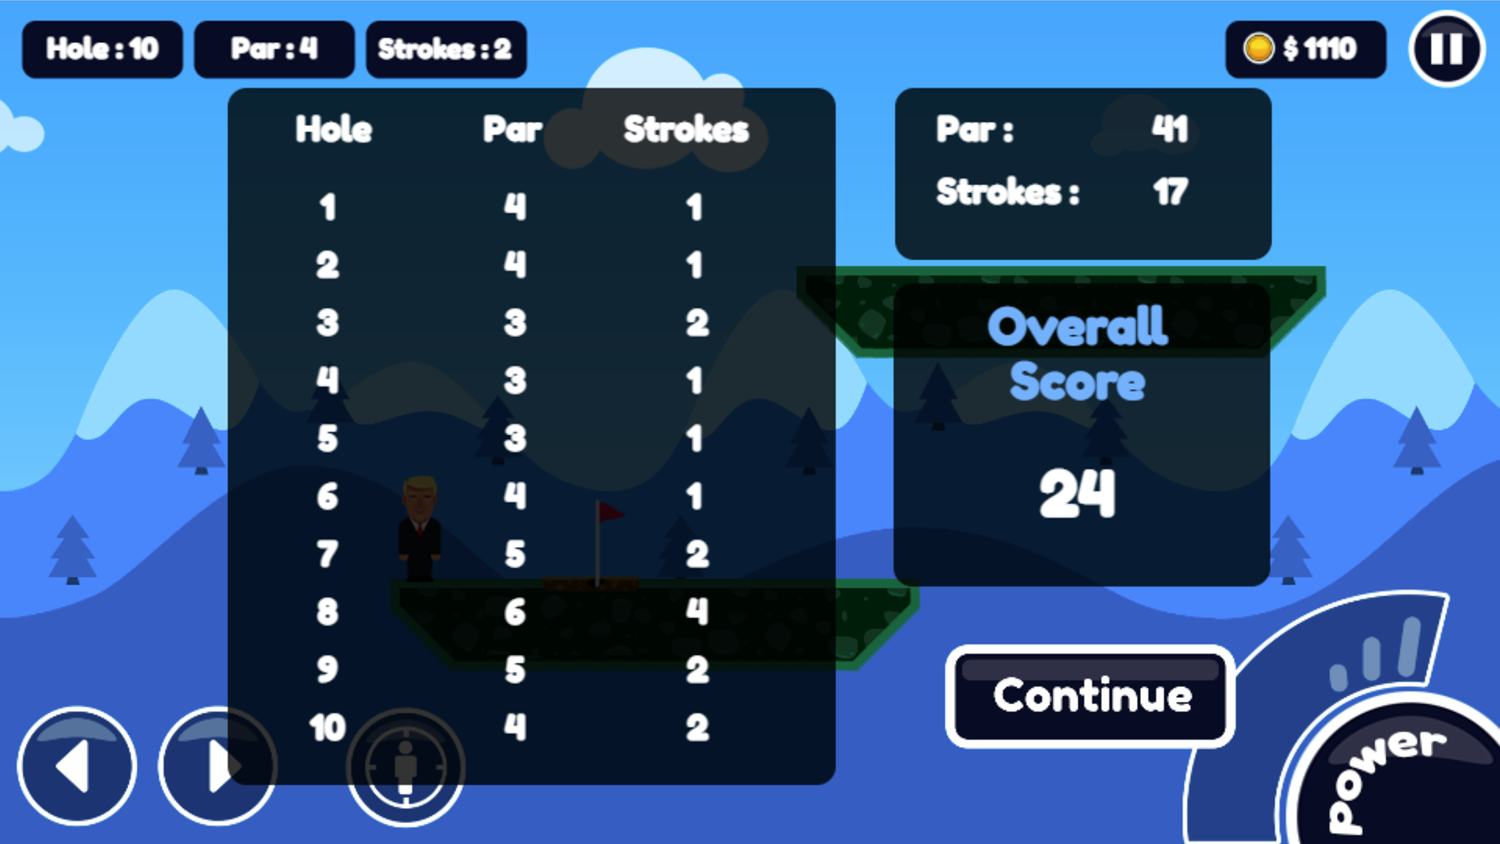 Presidential Golf Game Scorecard Screenshot.